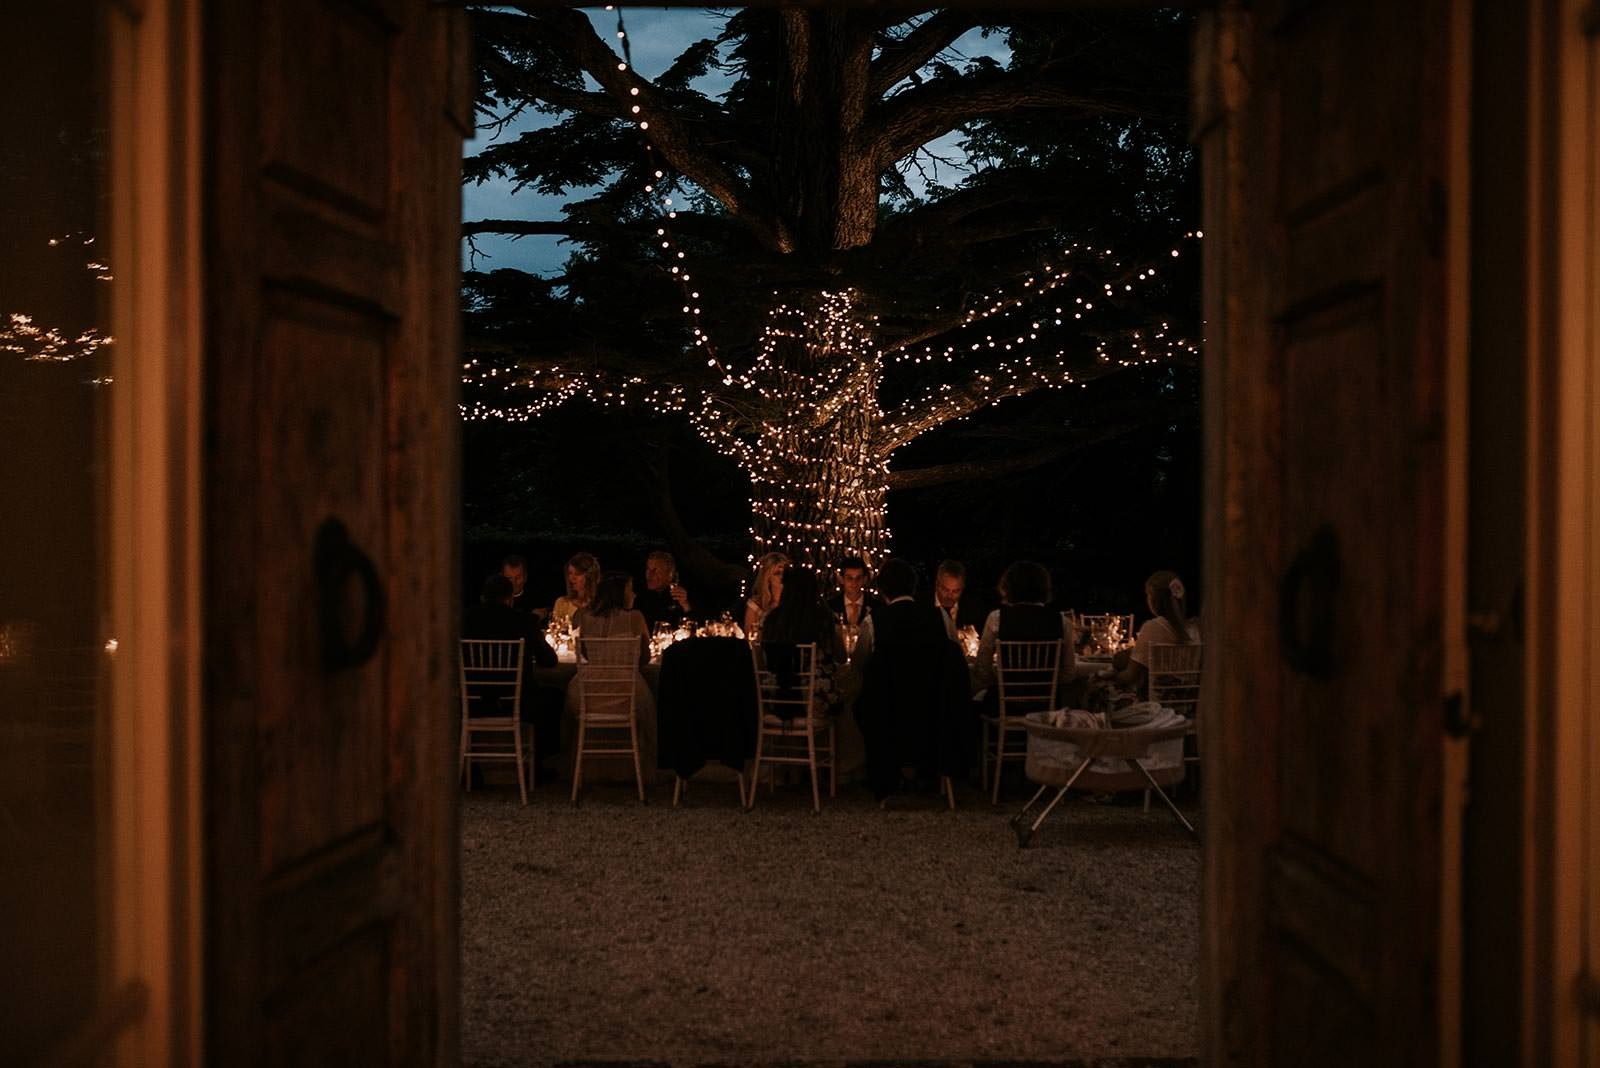 Reception - Wedding Reception in Volterra, Tuscany